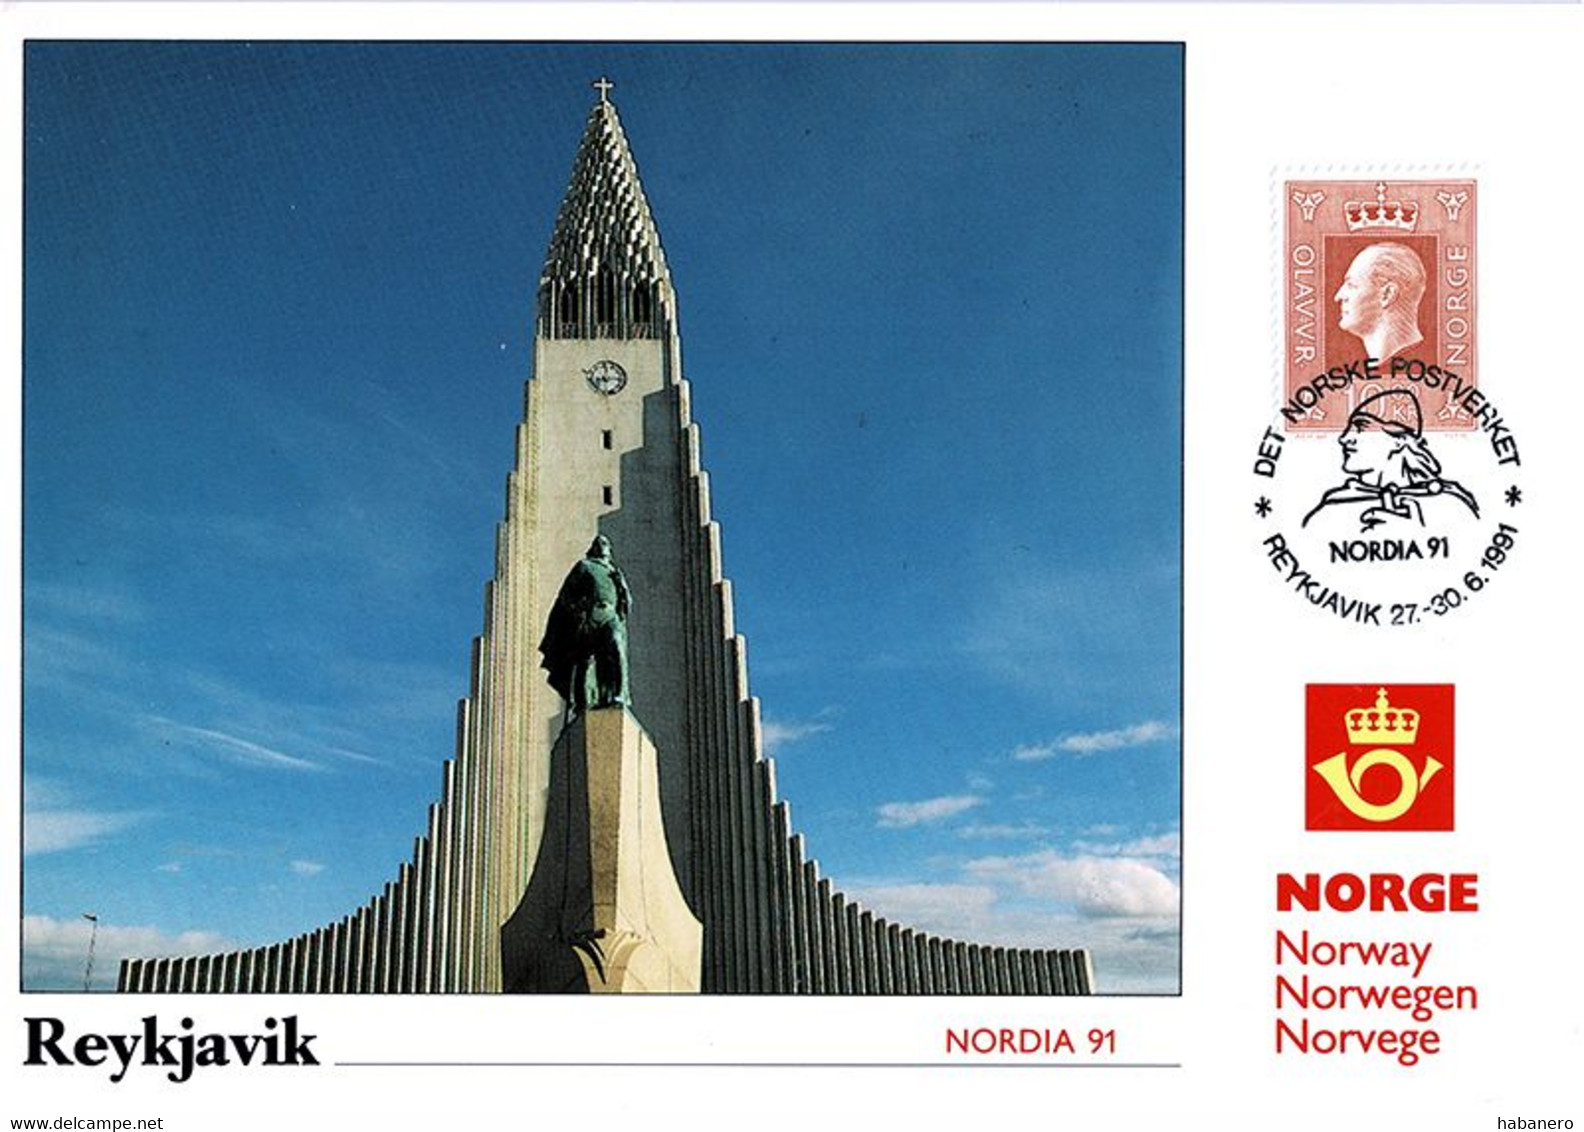 NORWAY 1991 PU82 NORDIA '91 REYKJAVIK EXHIBITION CARD - Maximumkarten (MC)